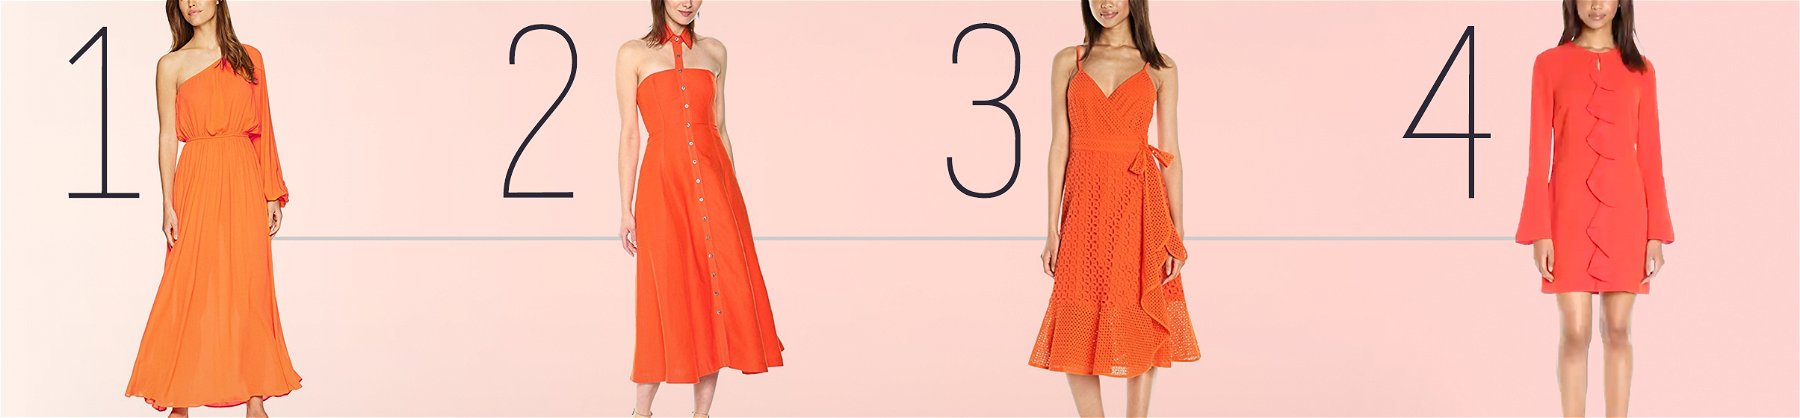 Blair Eadie Atlantic-Pacific Amazon Fashion The best bright dresses for summer